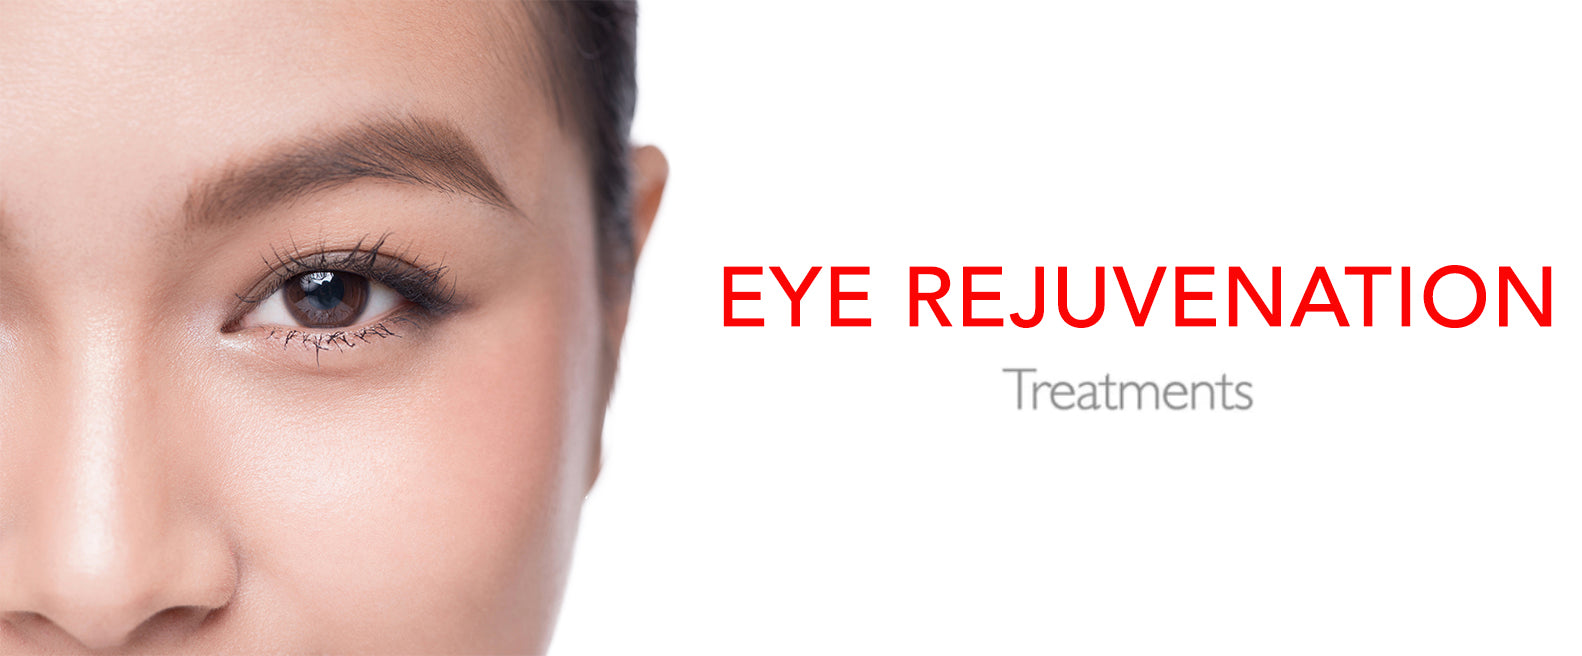 Eye Rejuvenation Treatments